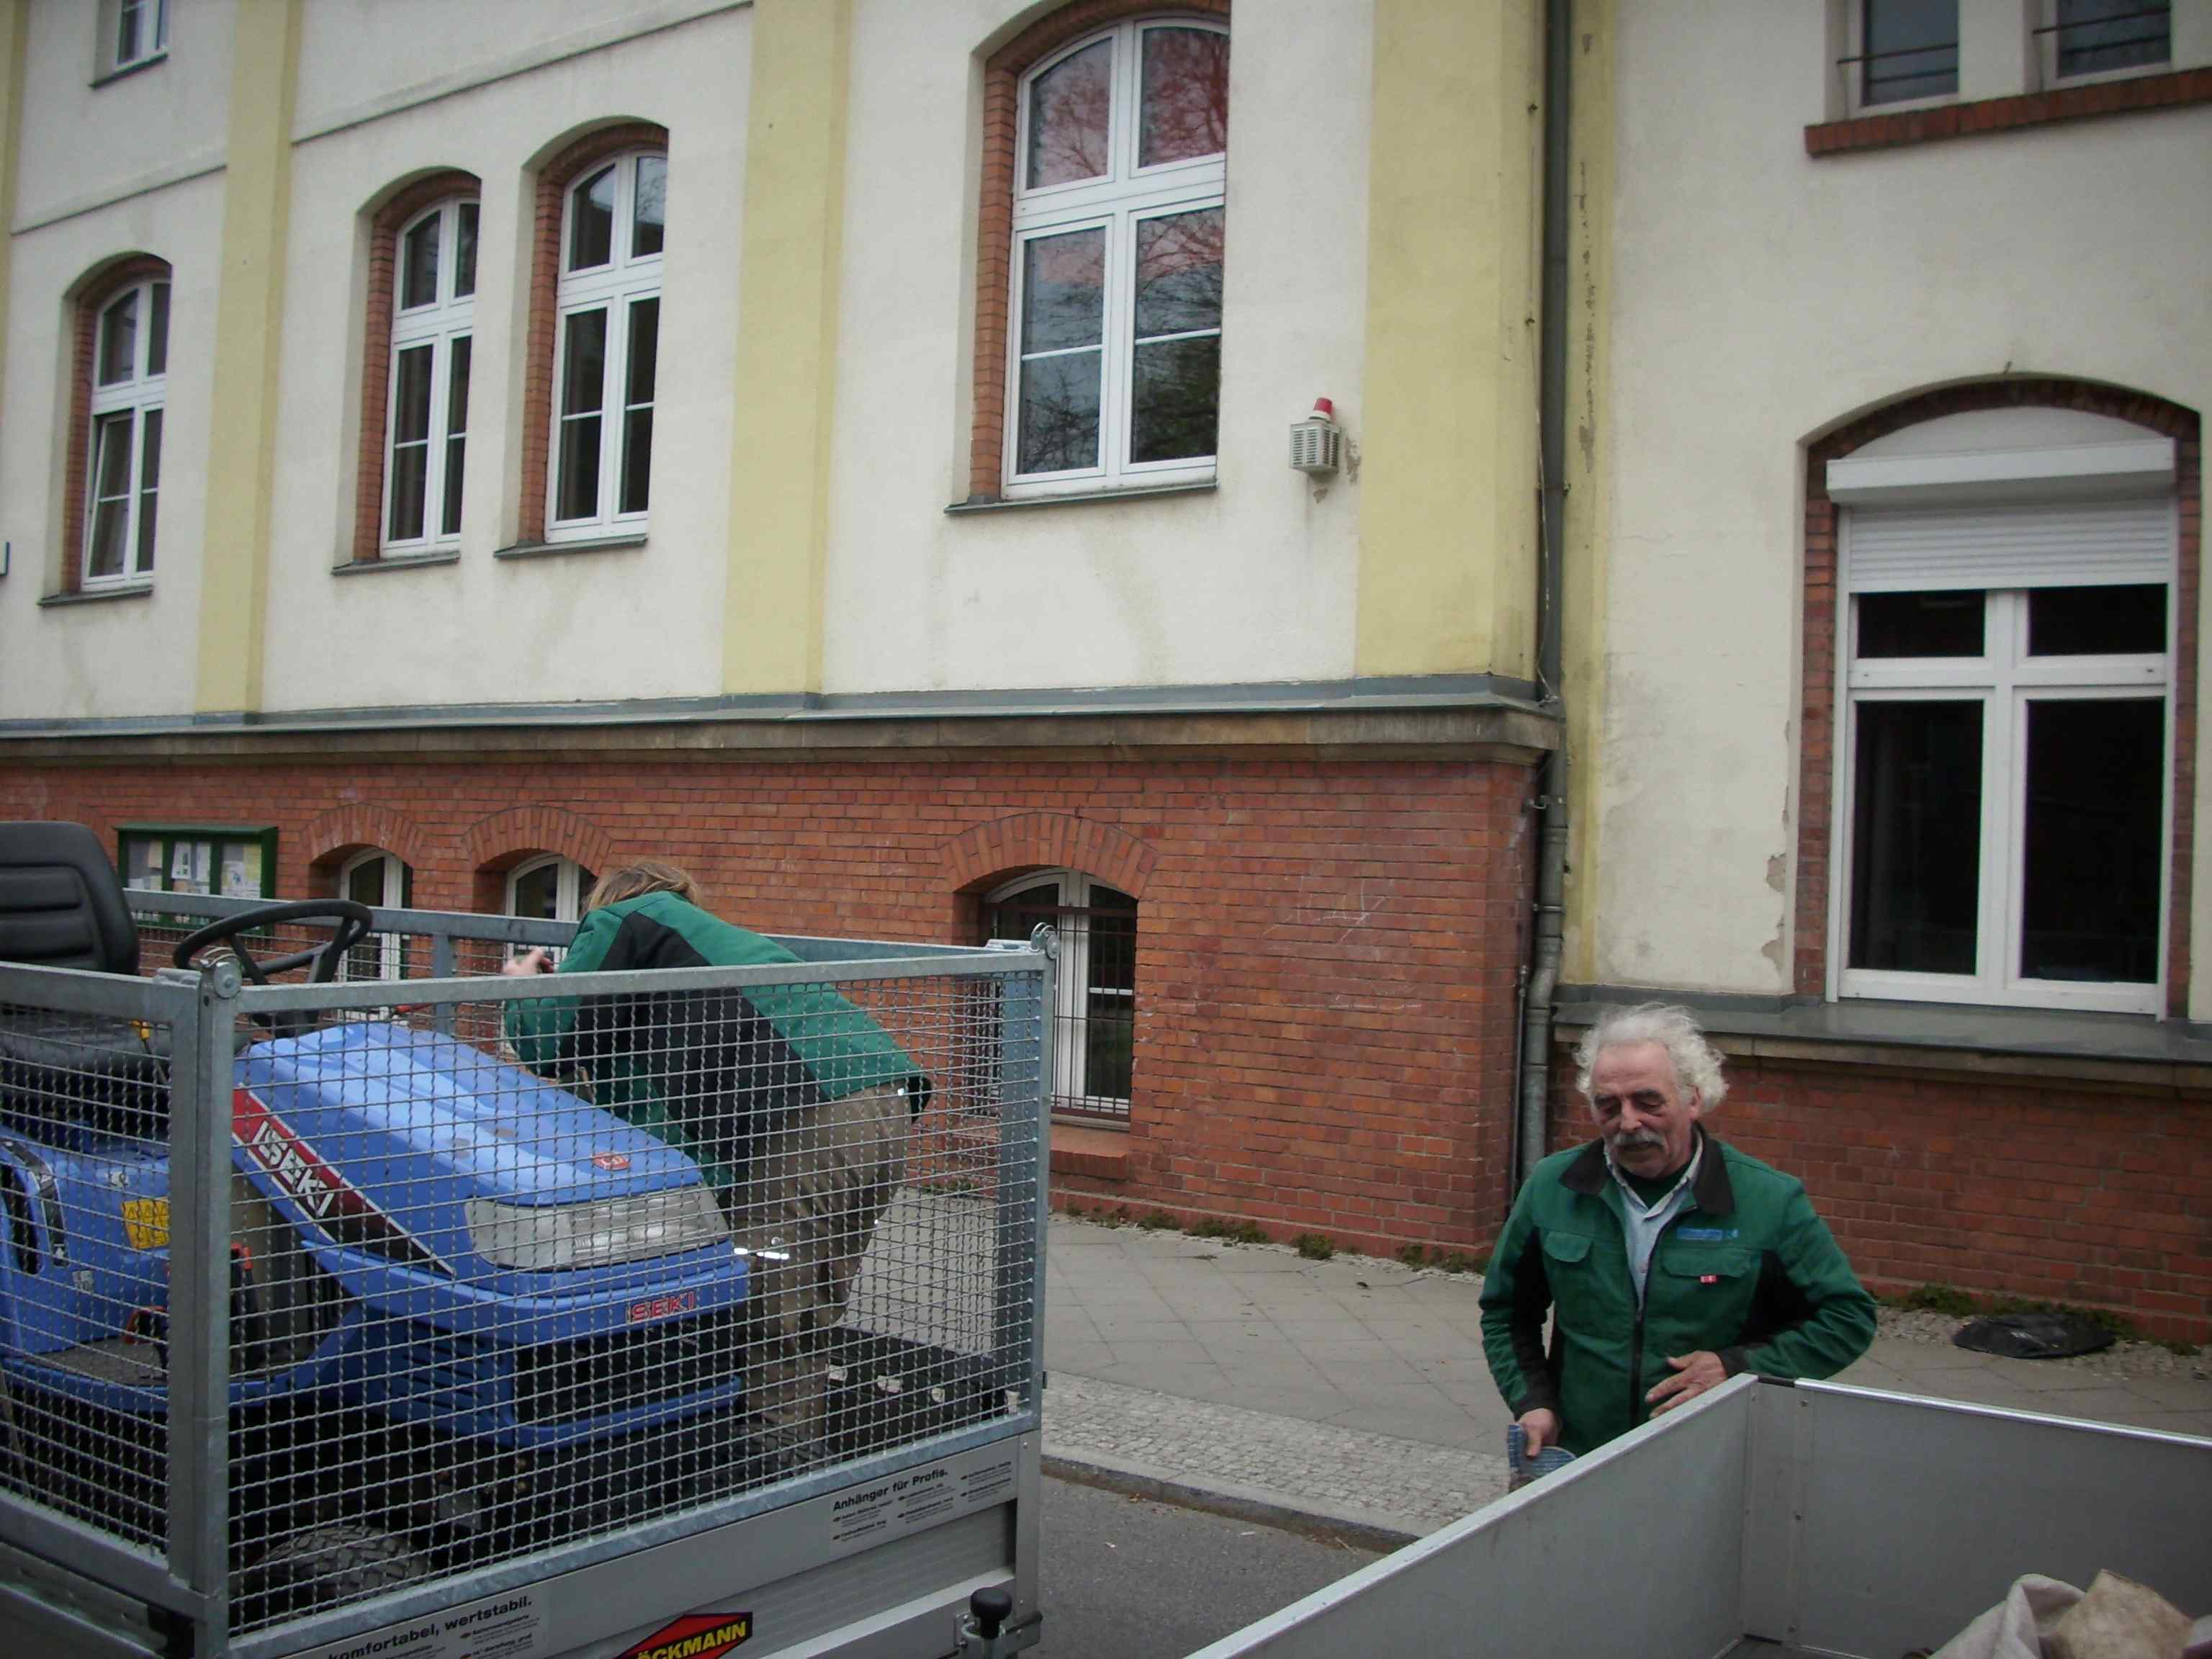 Farbfoto: Die Concordia Grundschule in Spandau im Jahre 2009. Foto: Kim Hartley.